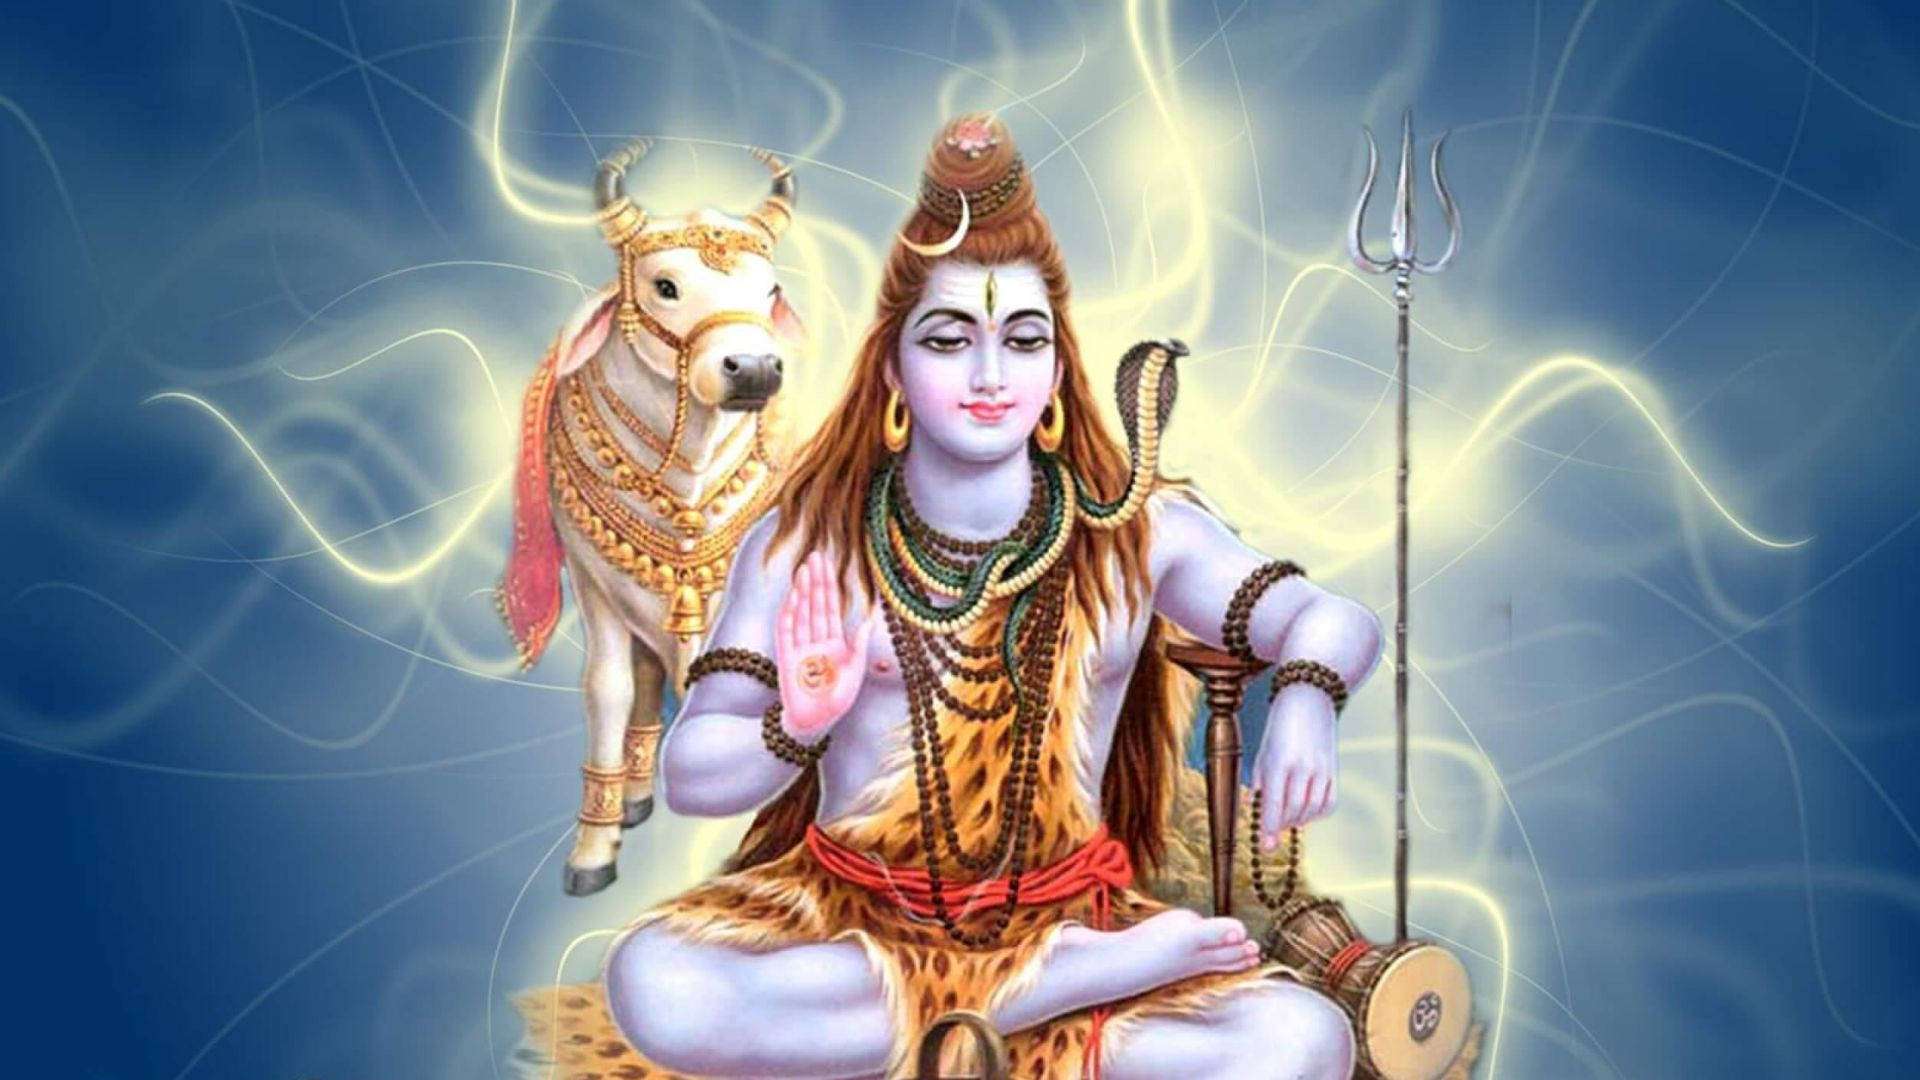 Free Lord Shiva 8k Wallpaper Downloads 100 Lord Shiva 8k Wallpapers for  FREE  Wallpaperscom